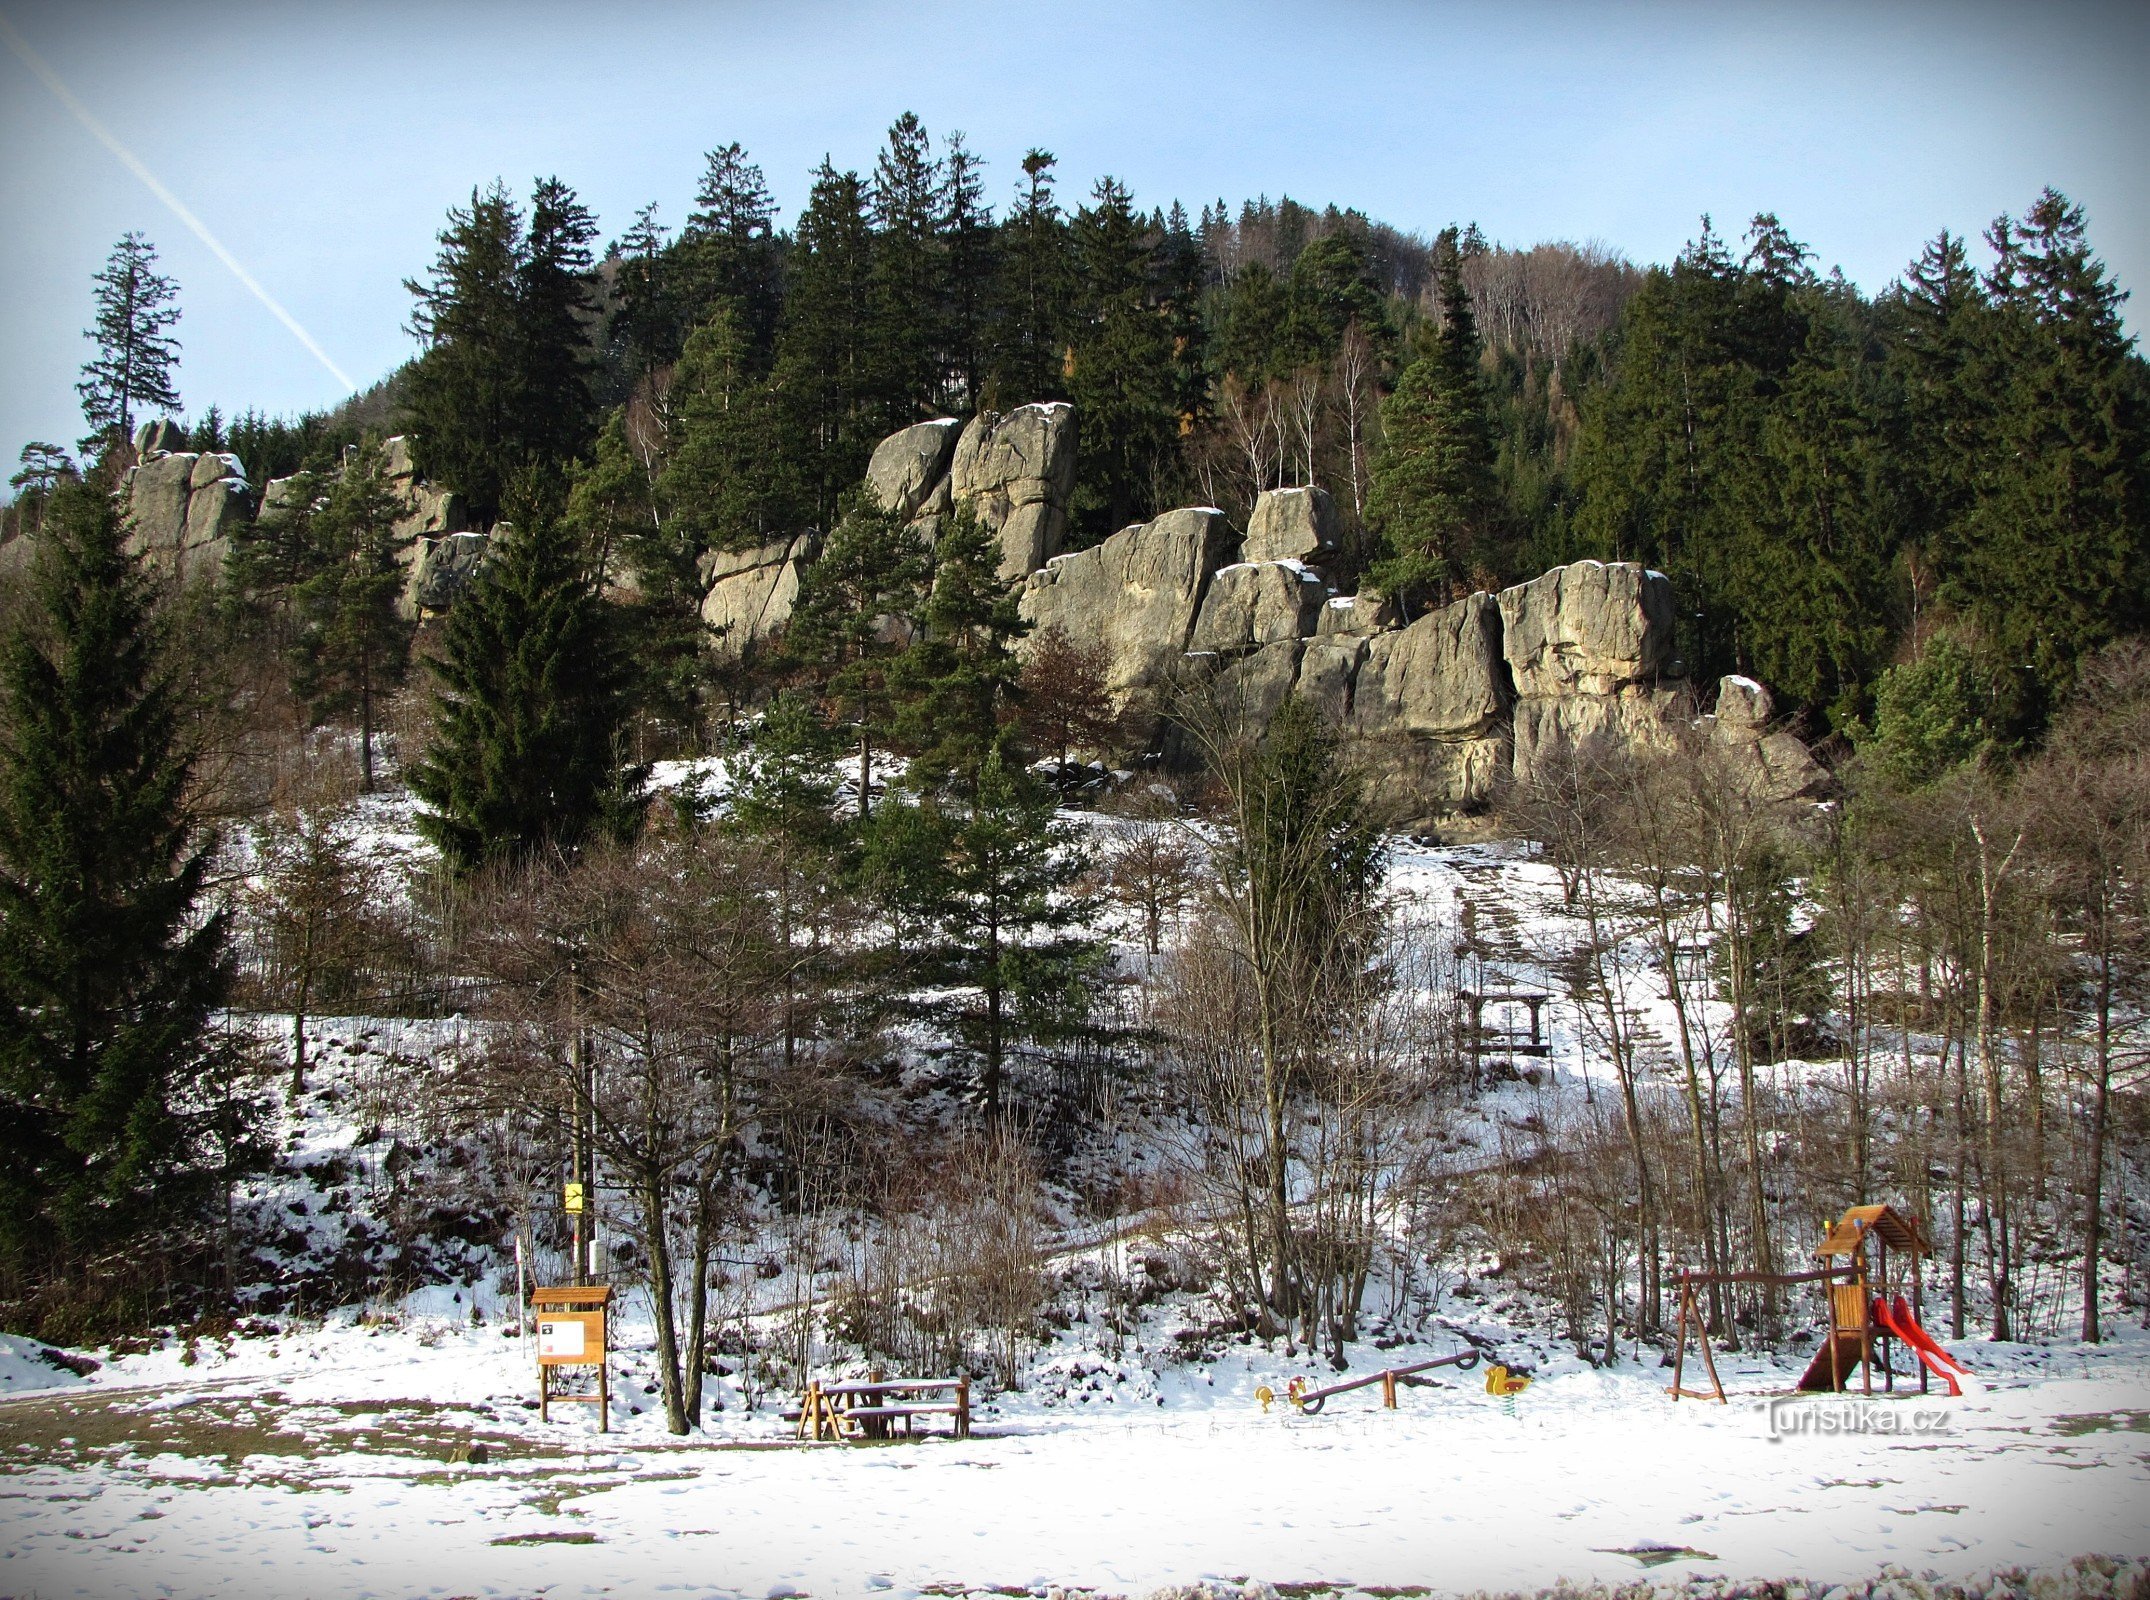 Motorrest under the Devil's Rocks in Lideček